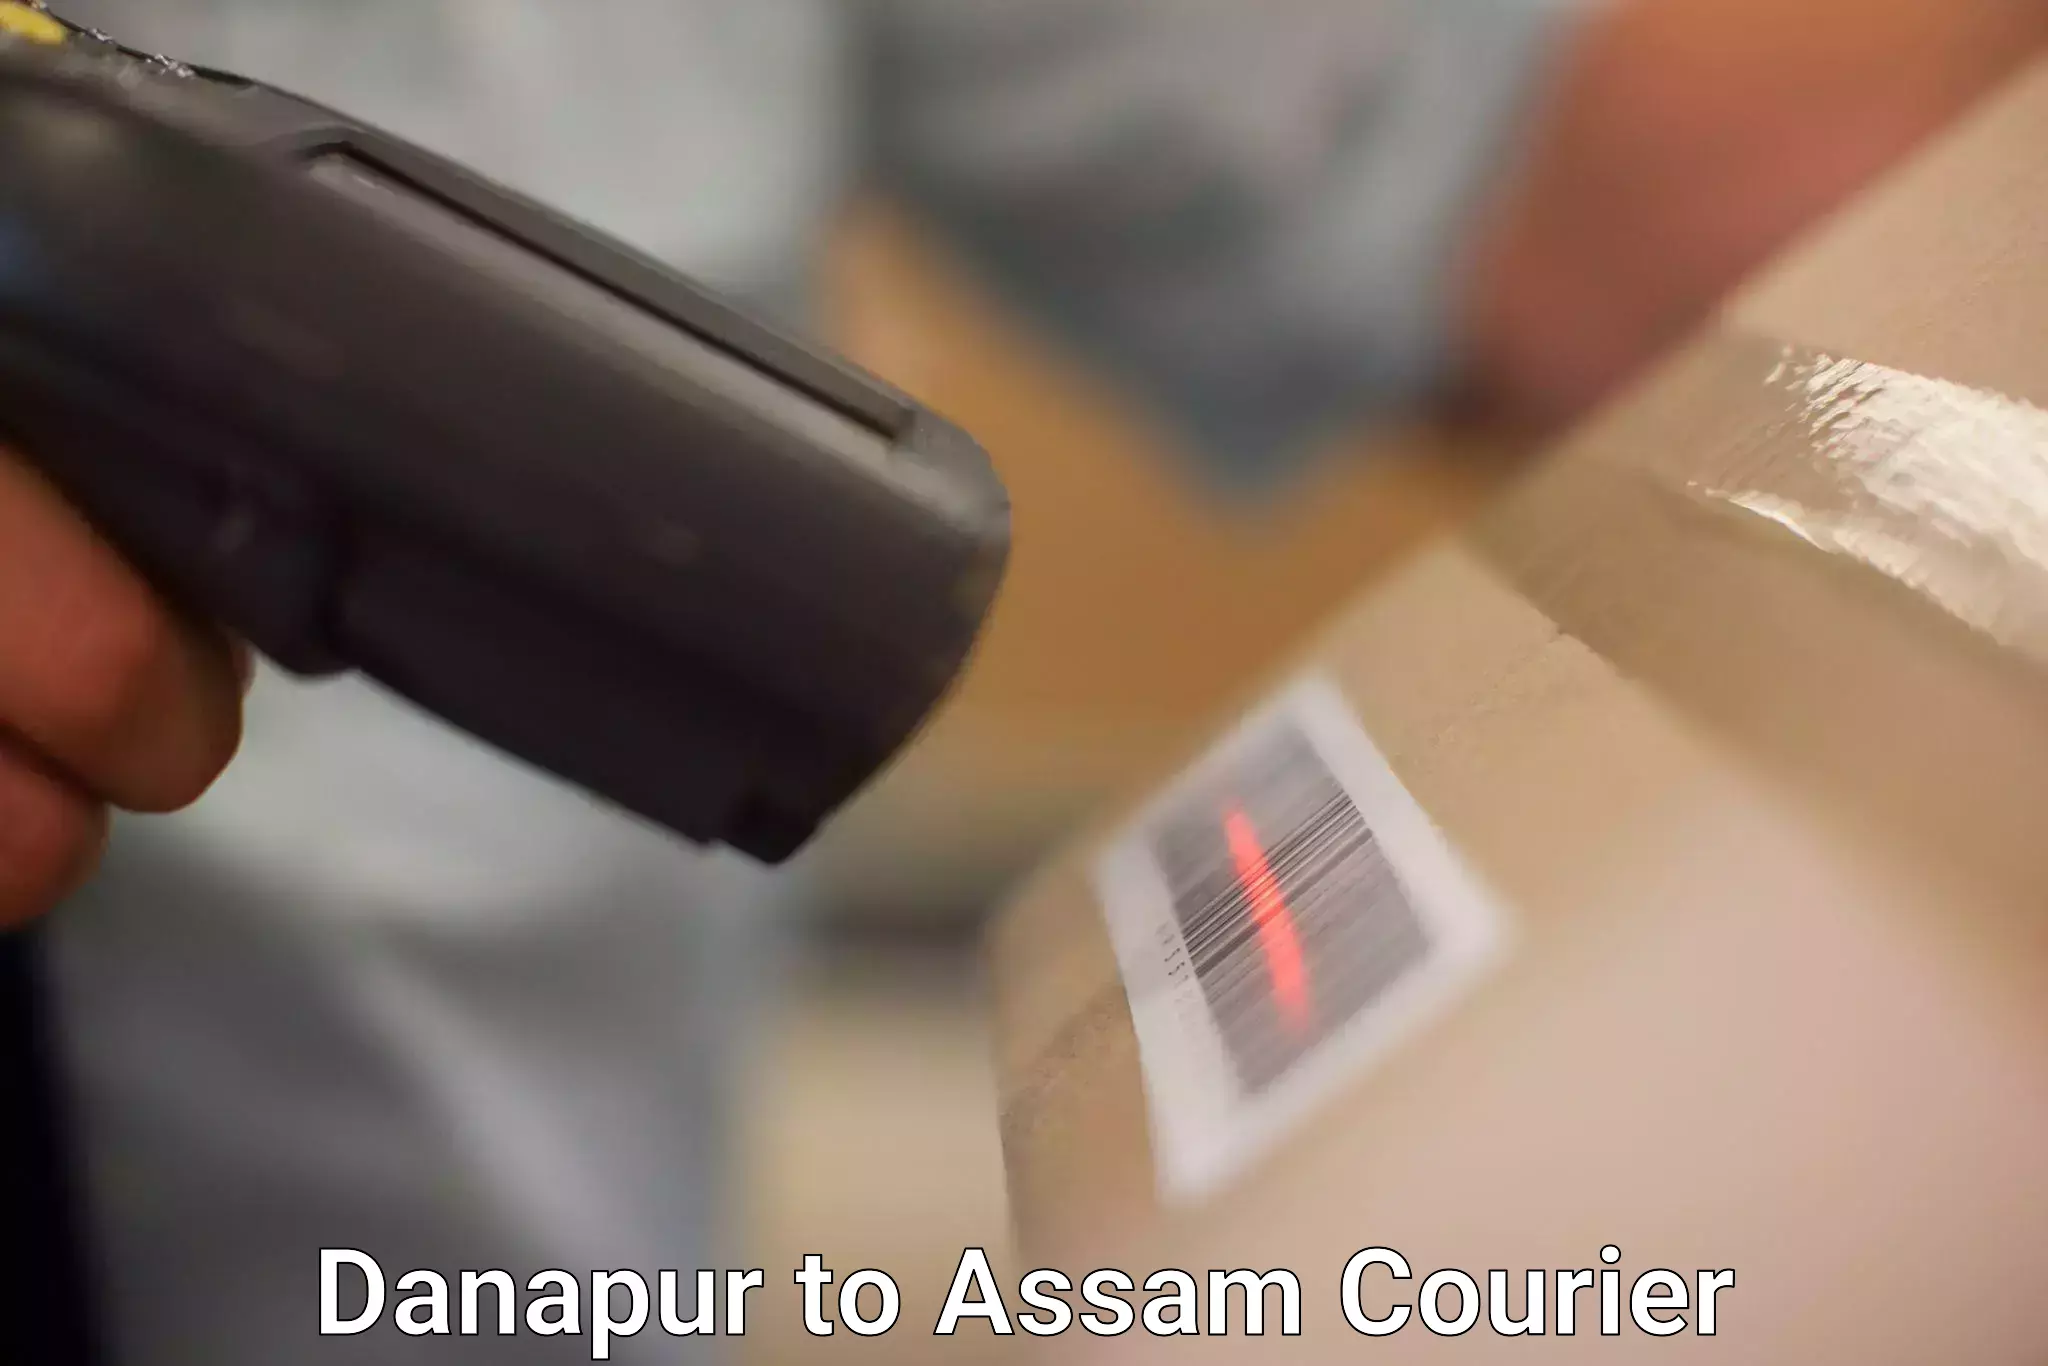 24/7 courier service in Danapur to Manikpur Bongaigaon